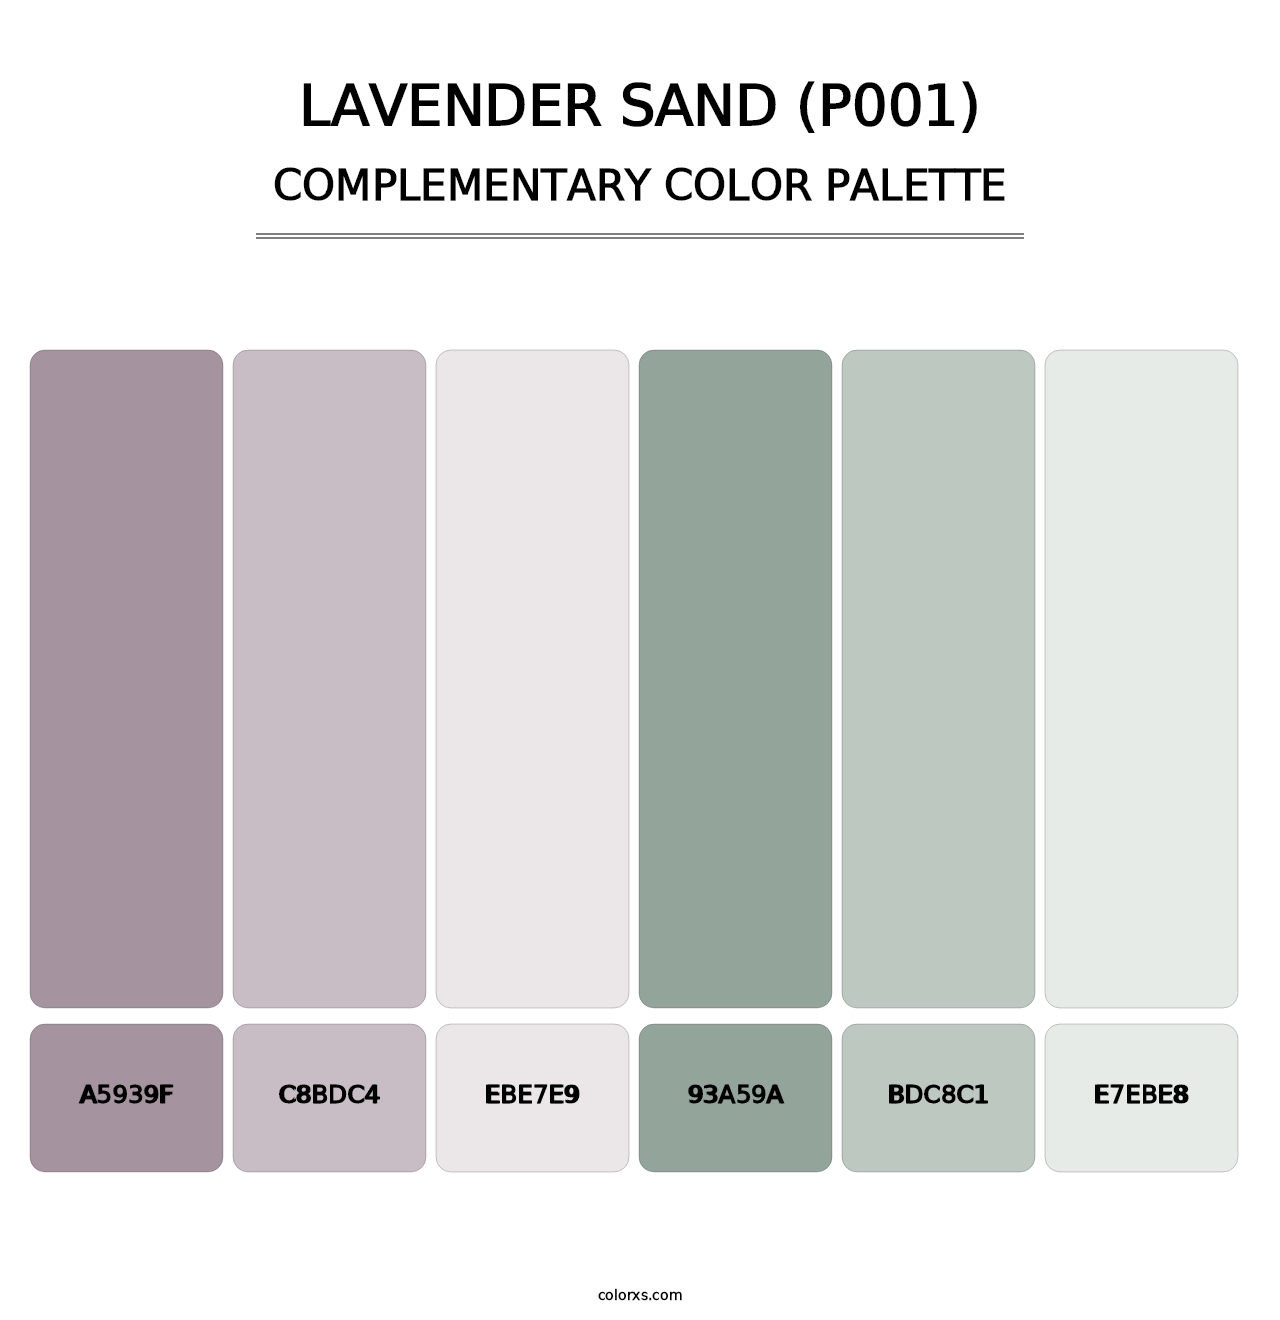 Lavender Sand (P001) - Complementary Color Palette